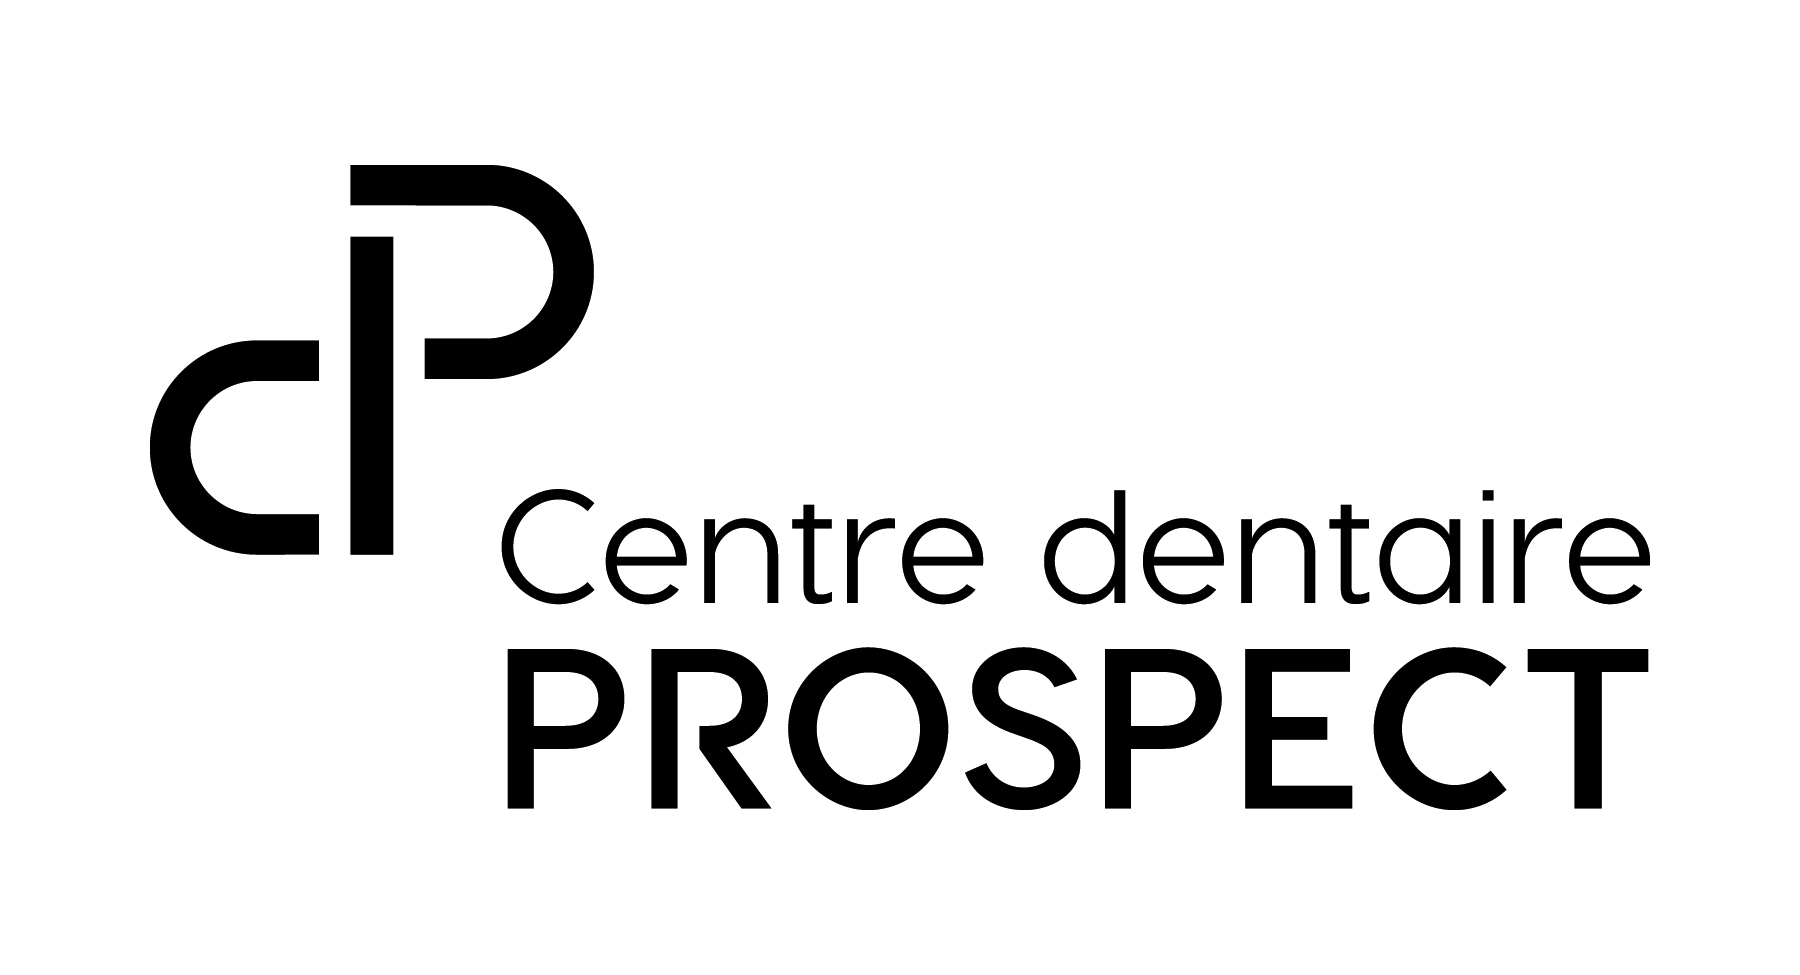 CDP-Logo-NB-HighRes.jpg